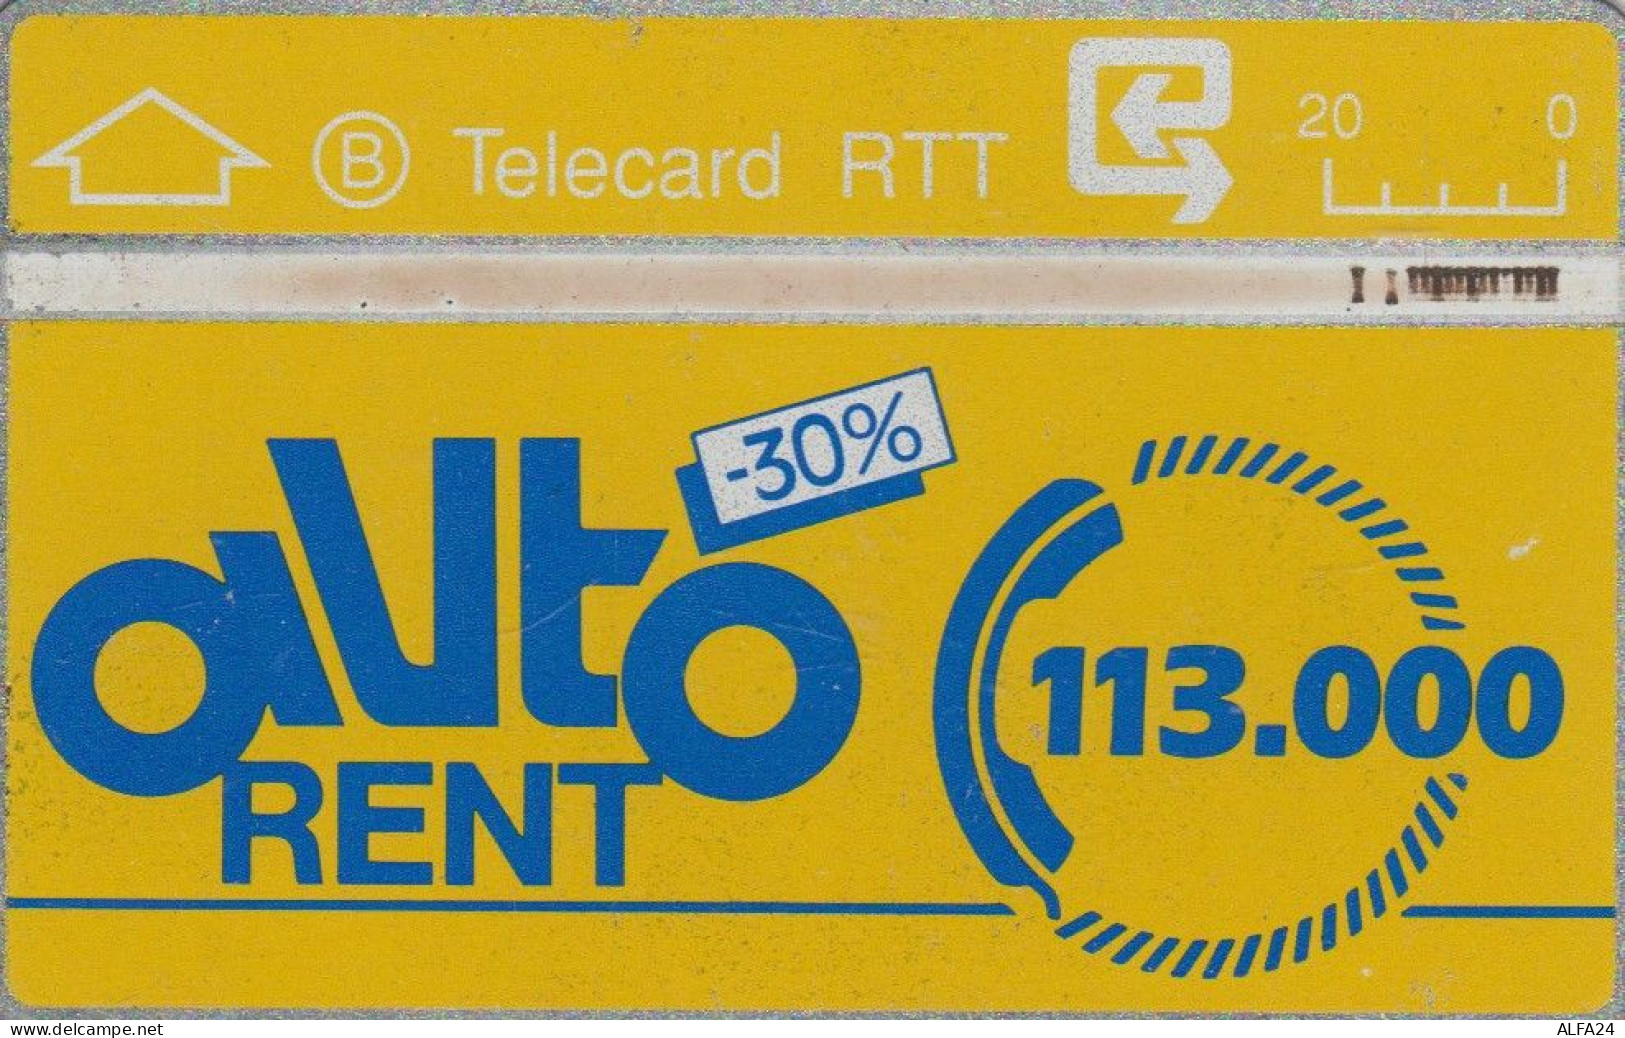 PHONE CARD BELGIO LANDYS (CK1807 - Senza Chip